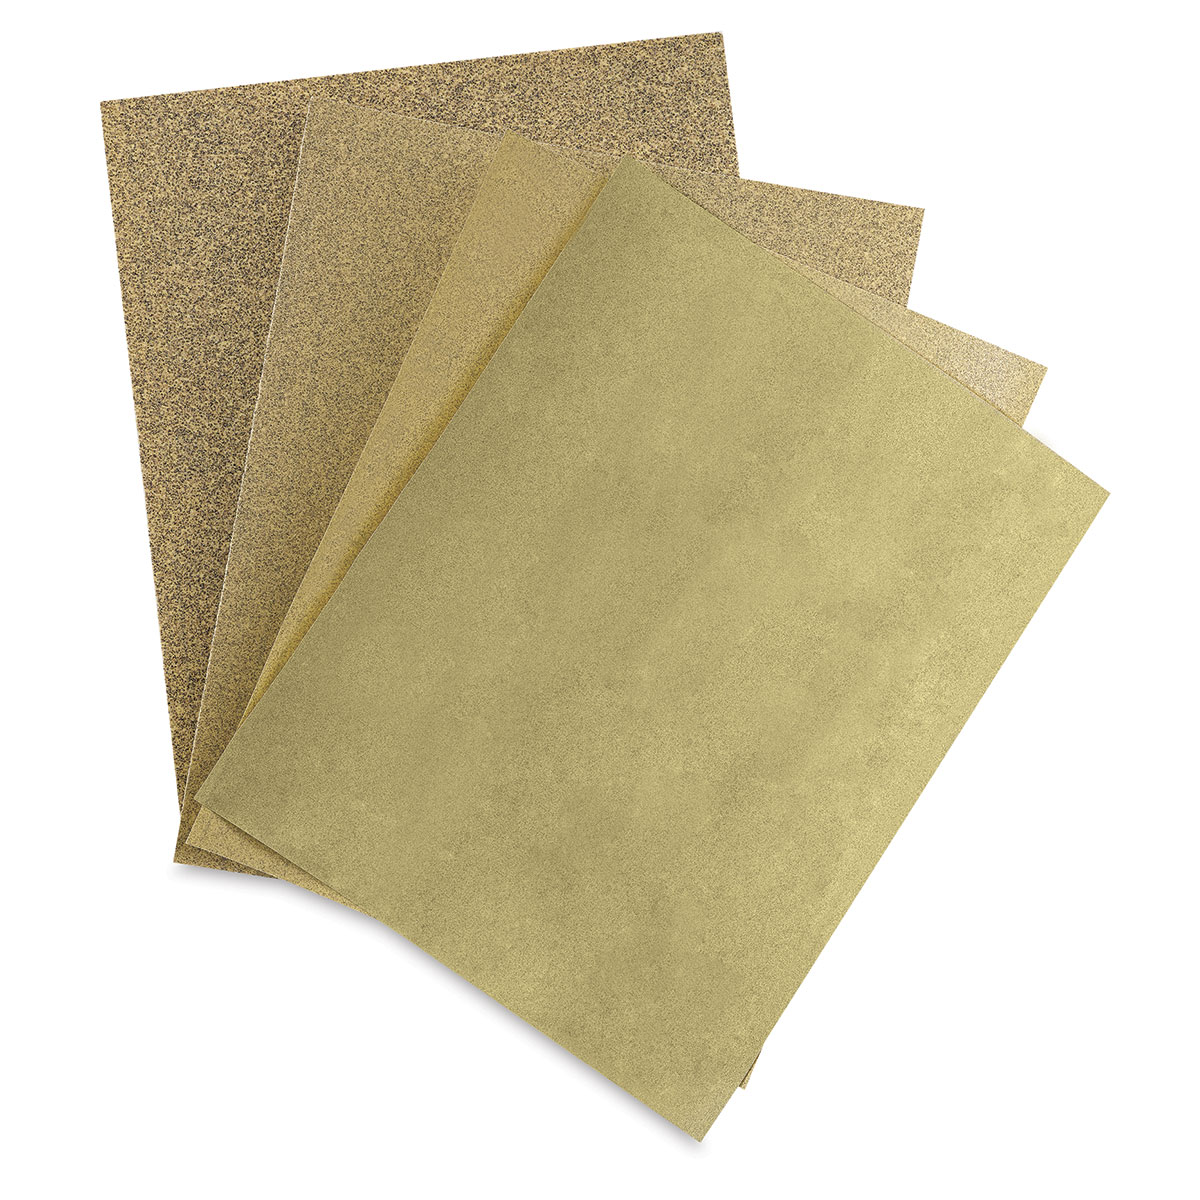 Metal 4/"x4/" fits Handheld Pad Sanders Sand Paper Set 36 Sheets Woodworking